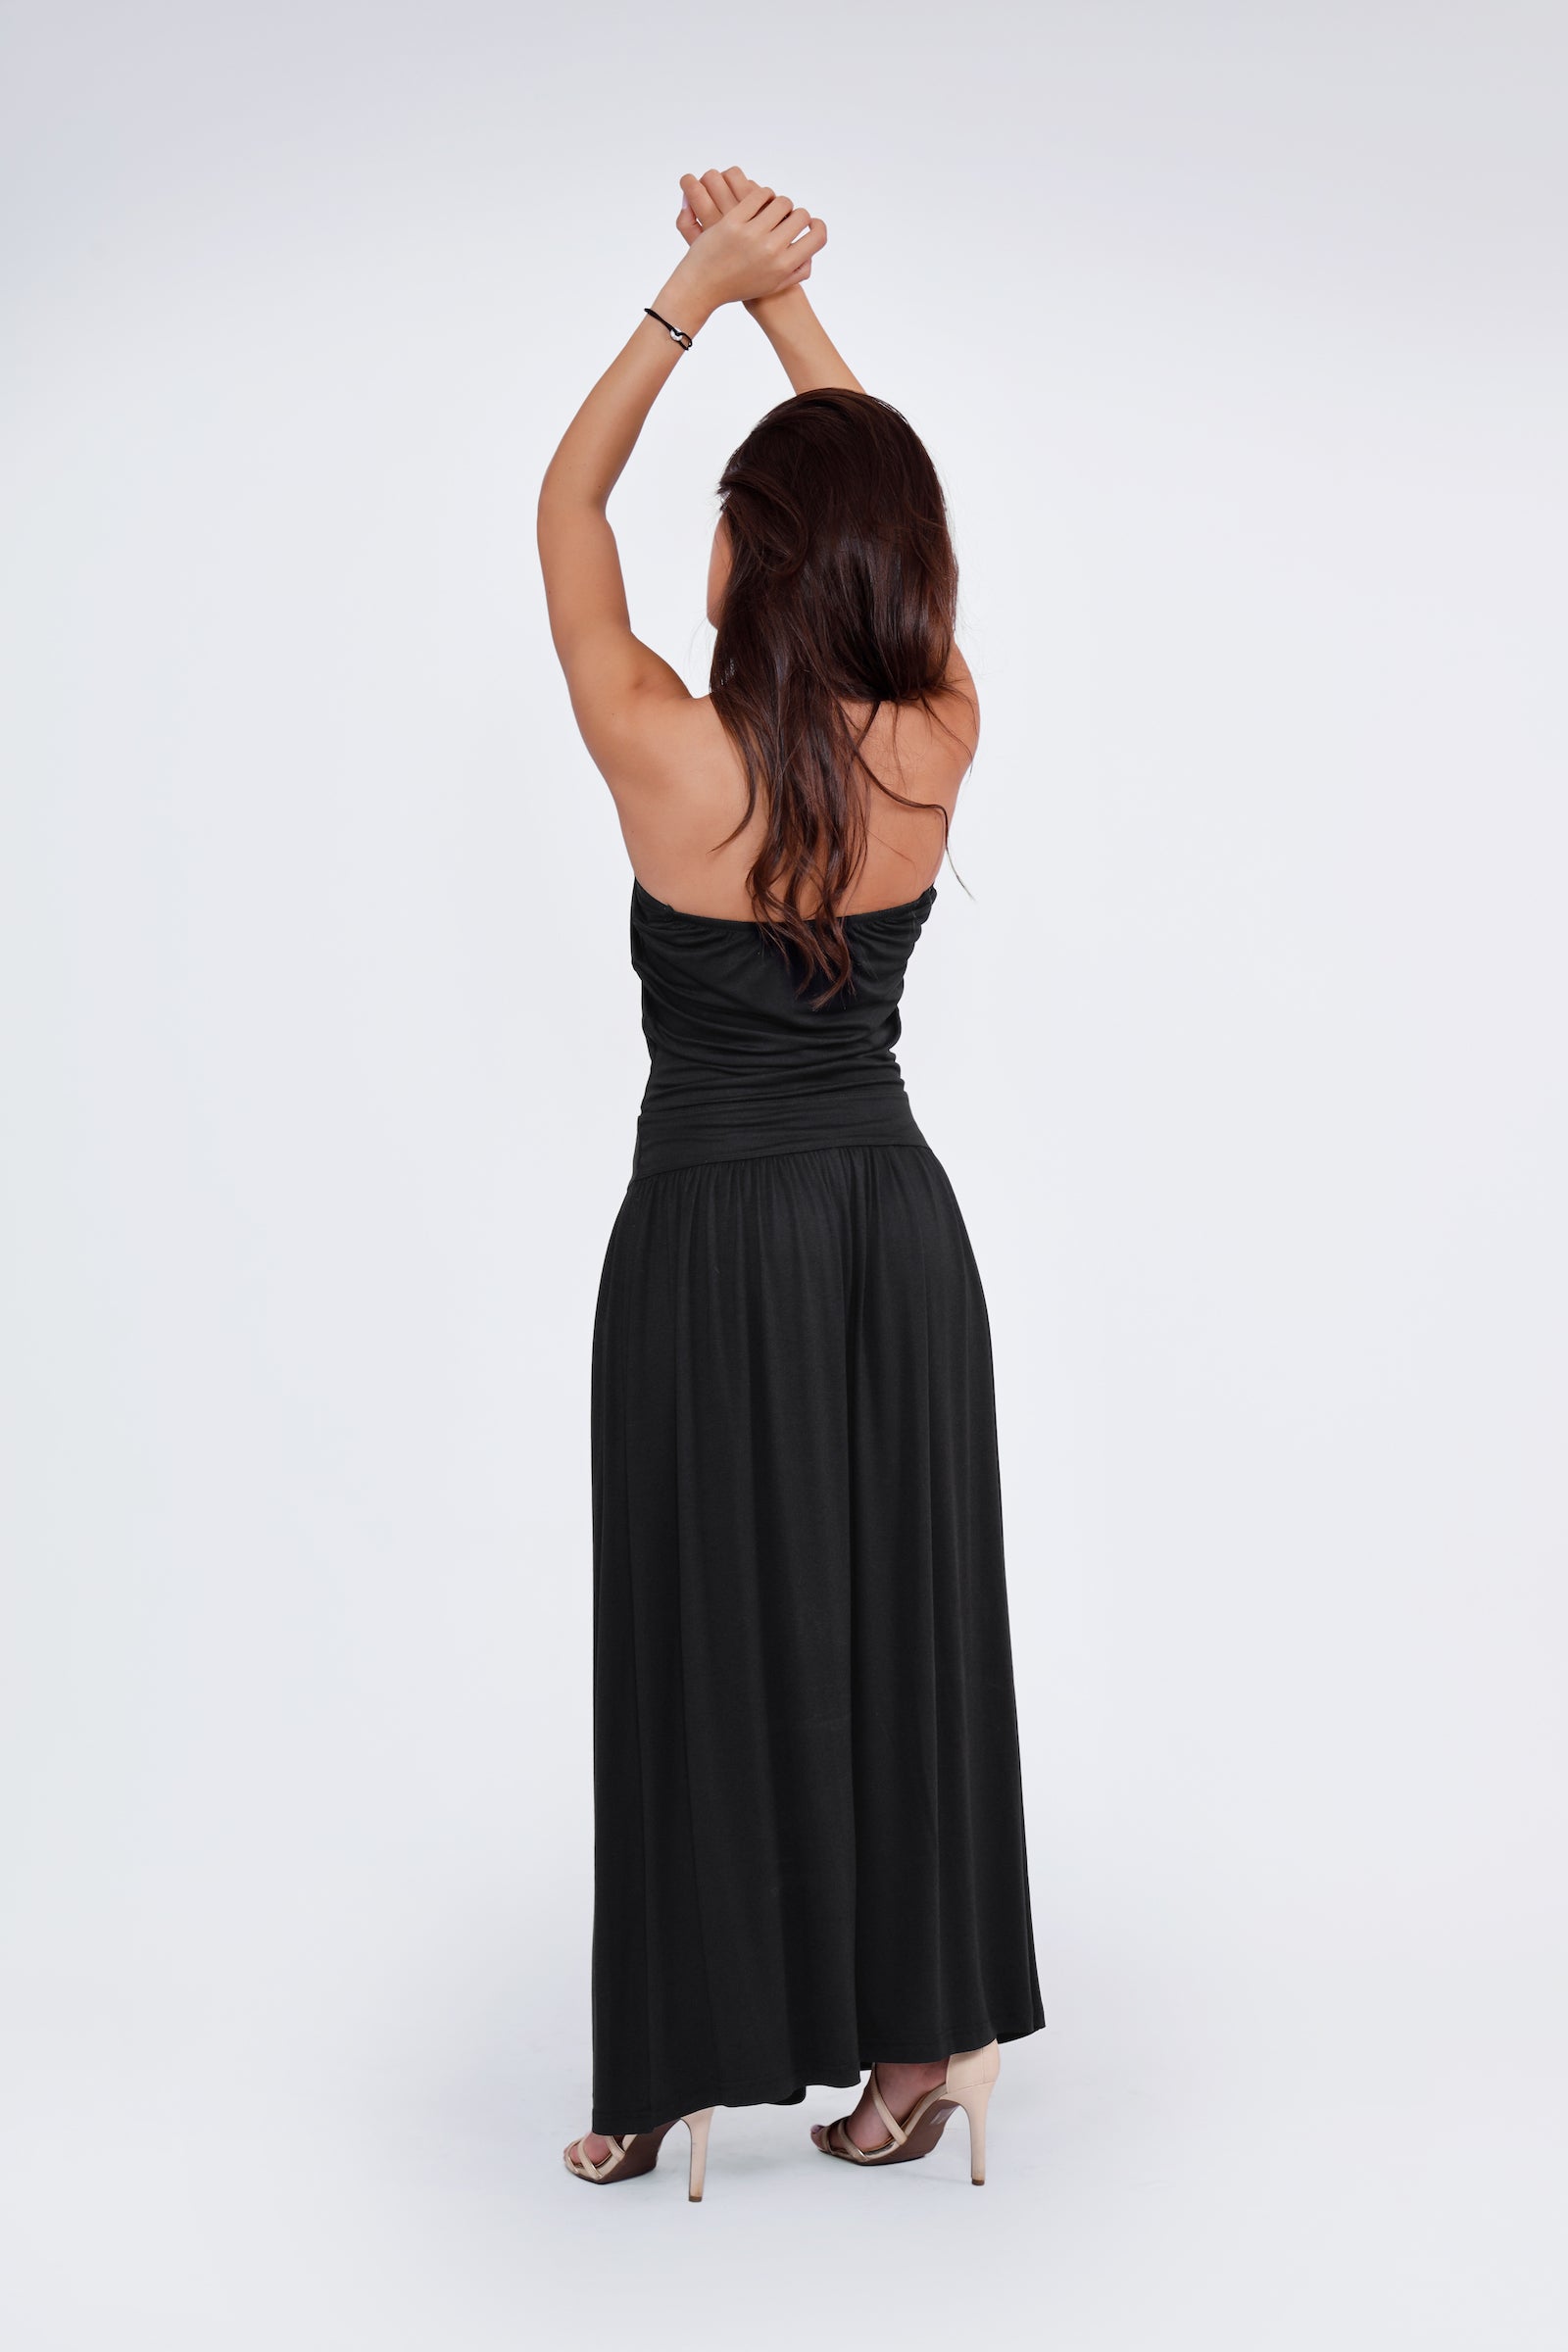 Alicia Strapless Dress - Black